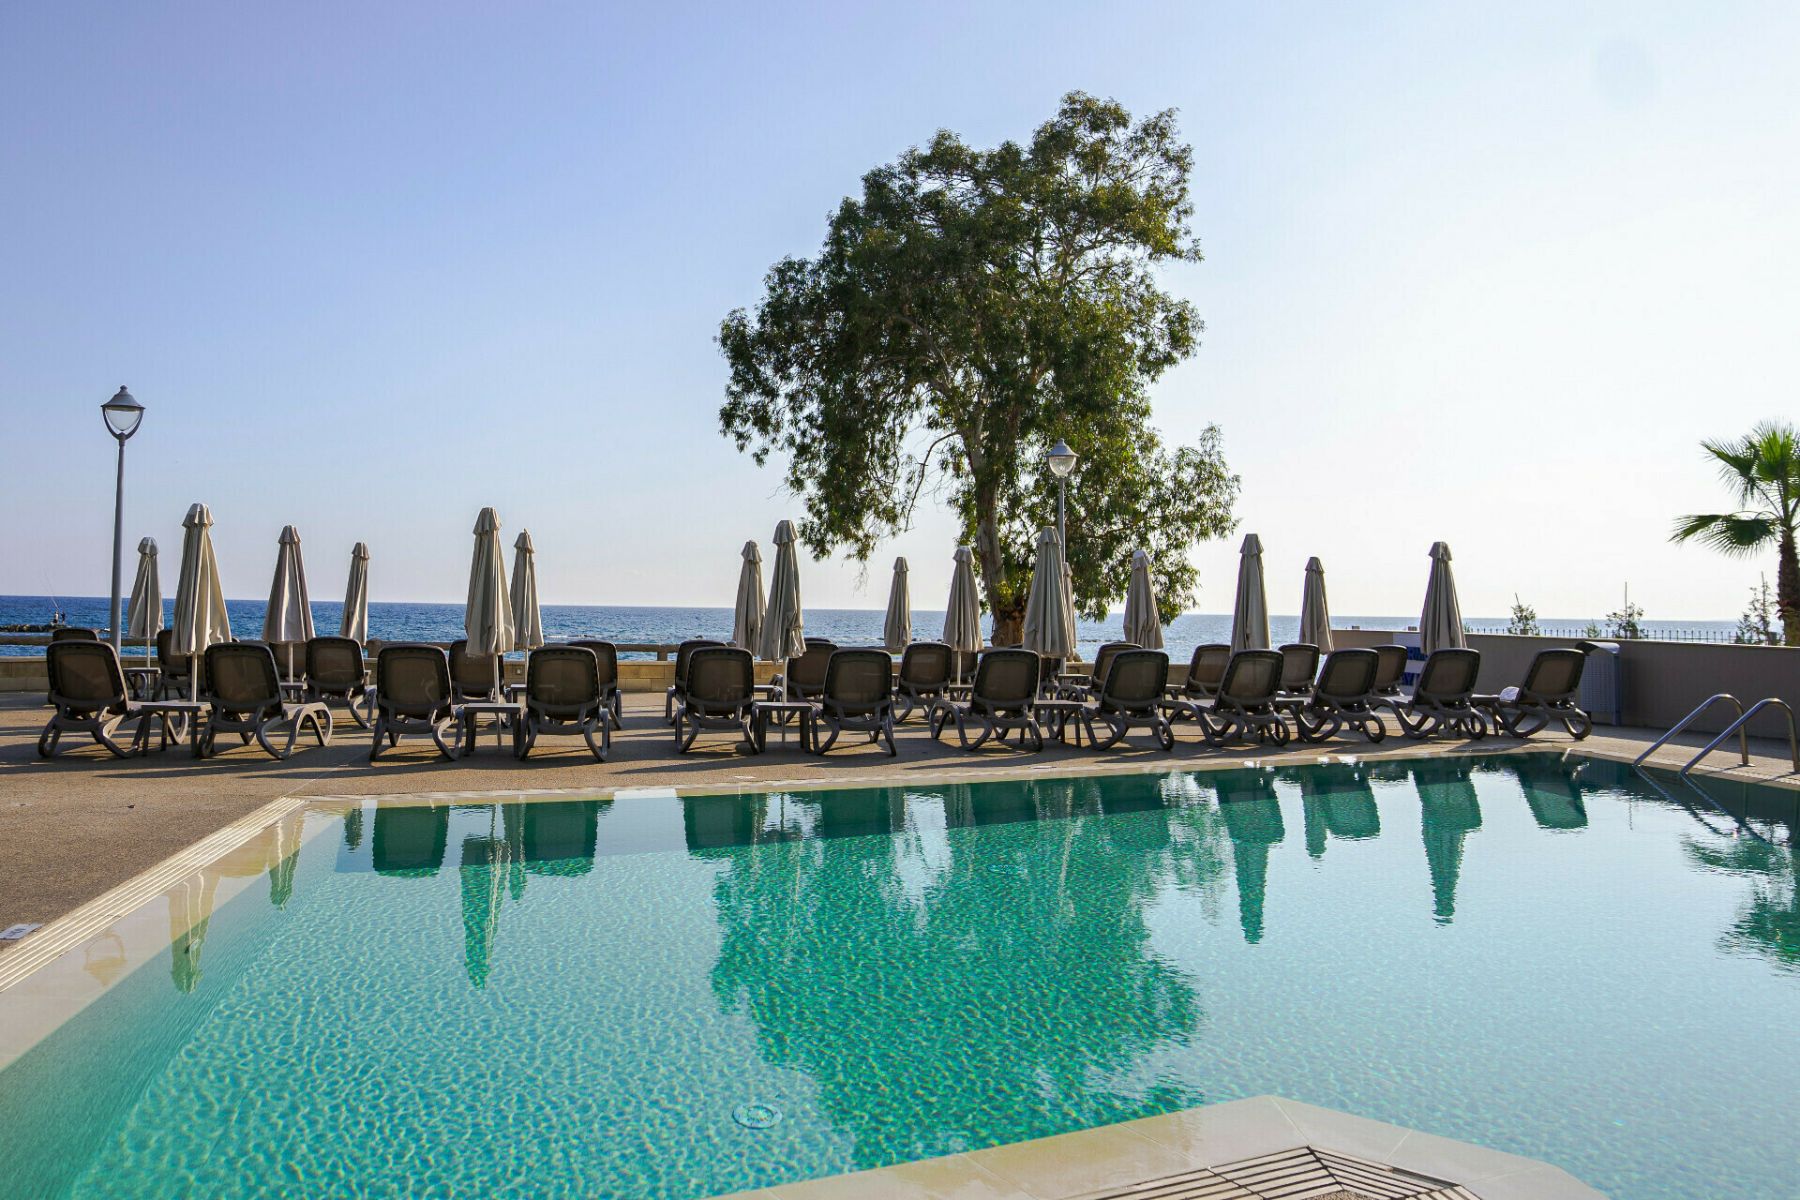 Harmony Bay Hotel in Limassol Cyprus